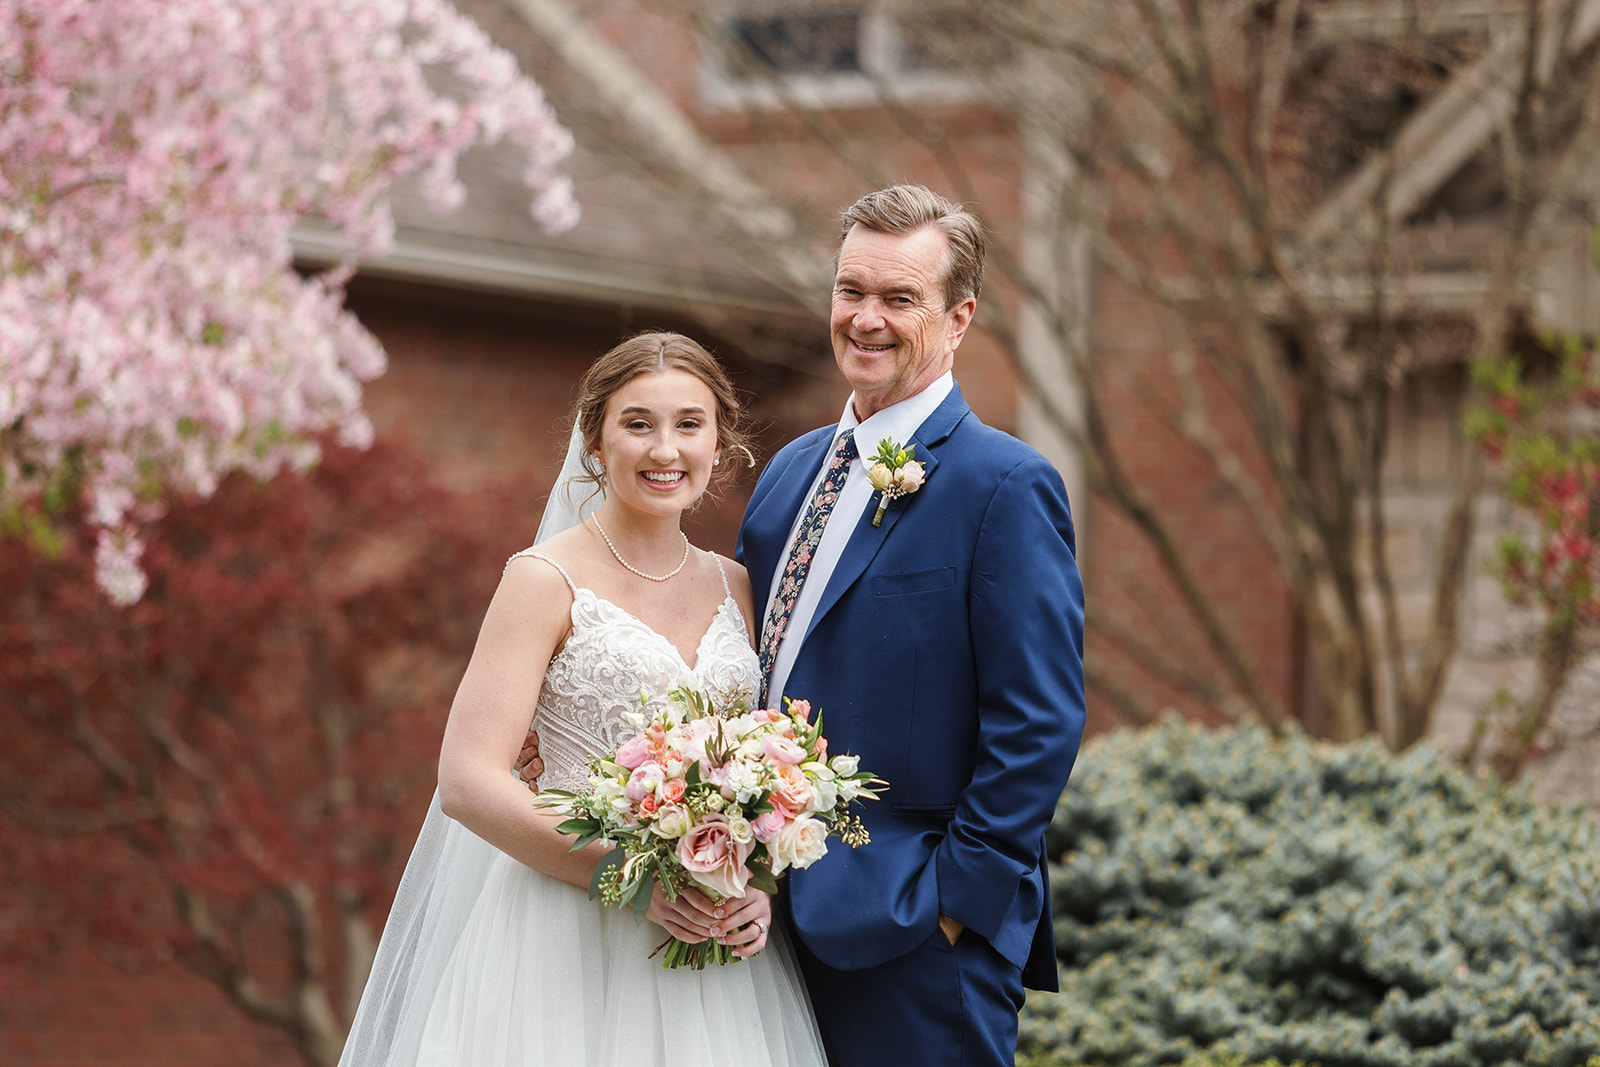 Hal Reed and daughter bridget at wedding